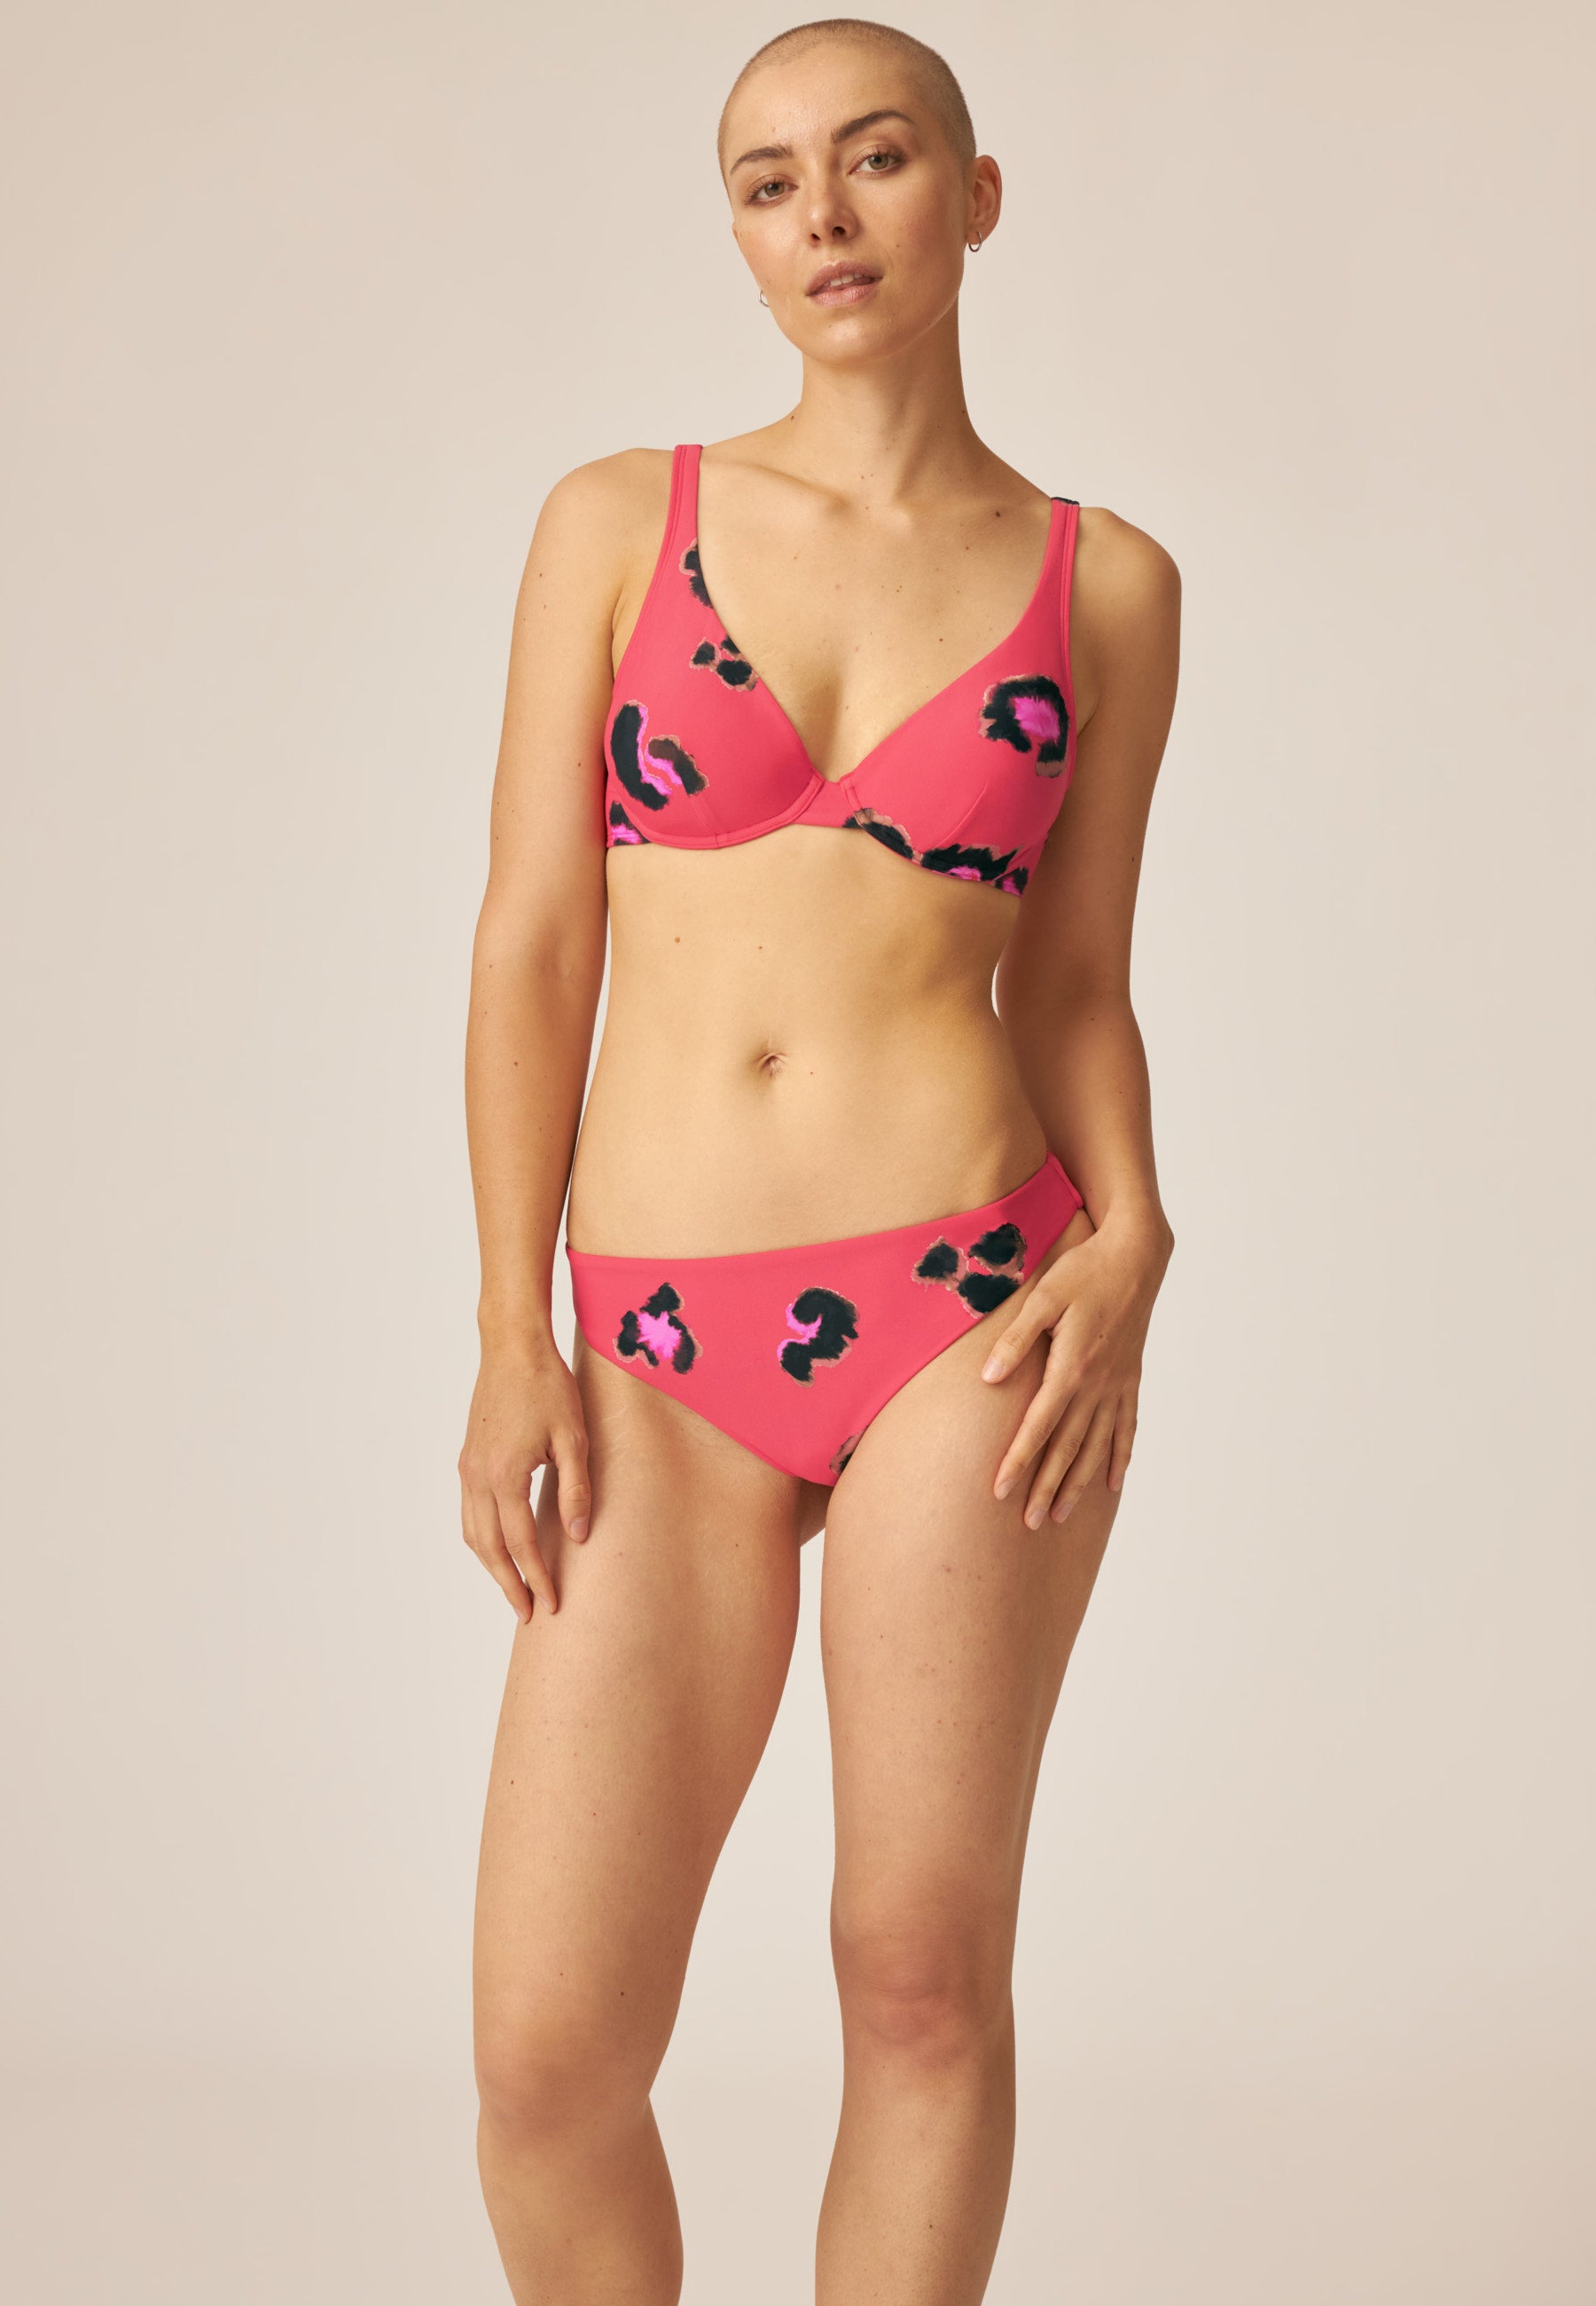 Bikini Hose Leo Print - Small Escapes / Safari Park - Rot Braun Pink